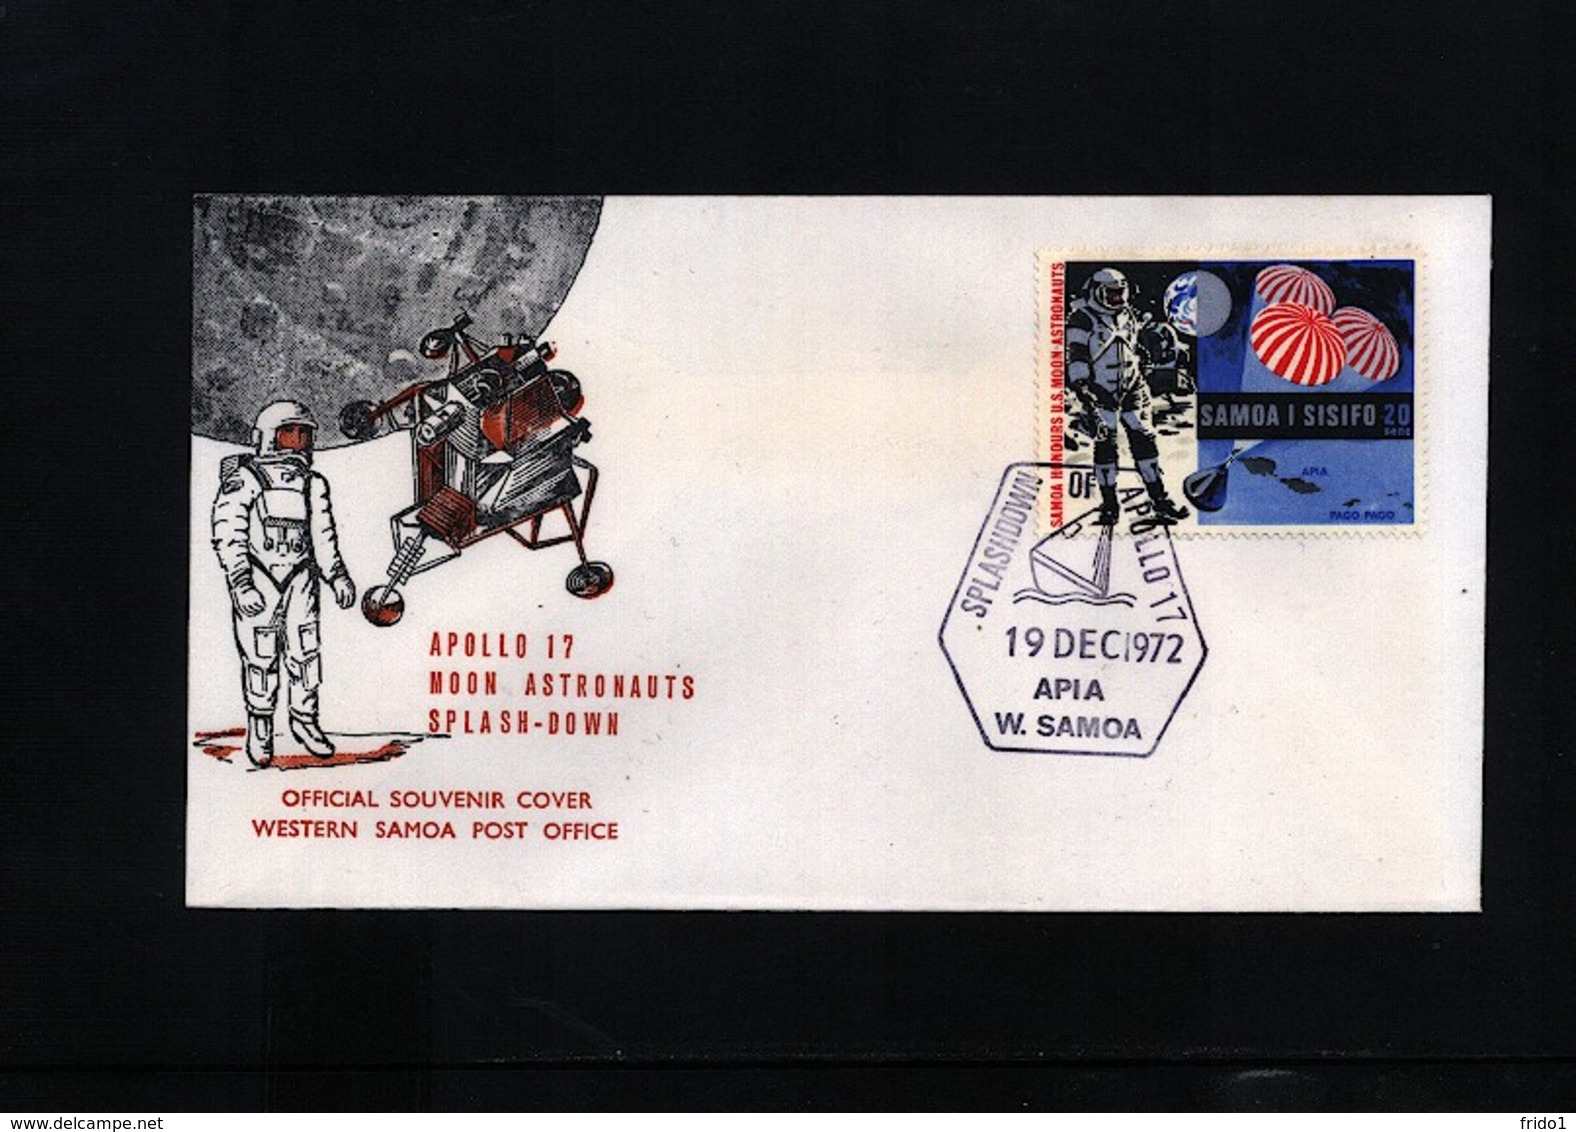 Samoa And Sisifo 1972 Moon Astronauts Interesting Cover - Oceania